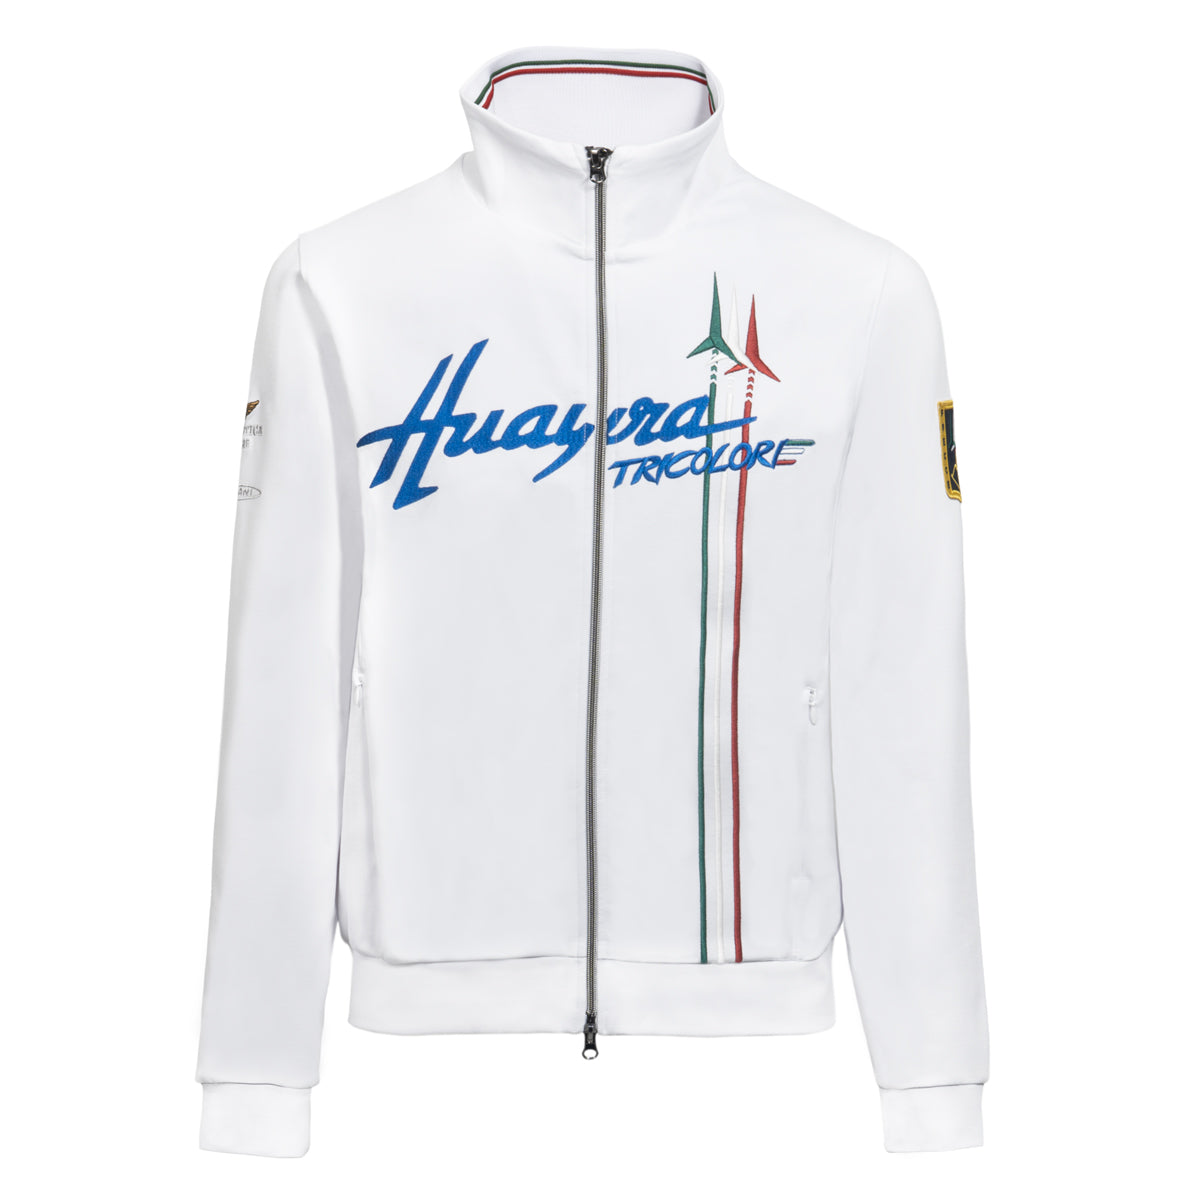 Weisses Herrensweatshirt Mit Durchgehendem Reissverschluss | Huayra Tricolore Capsule